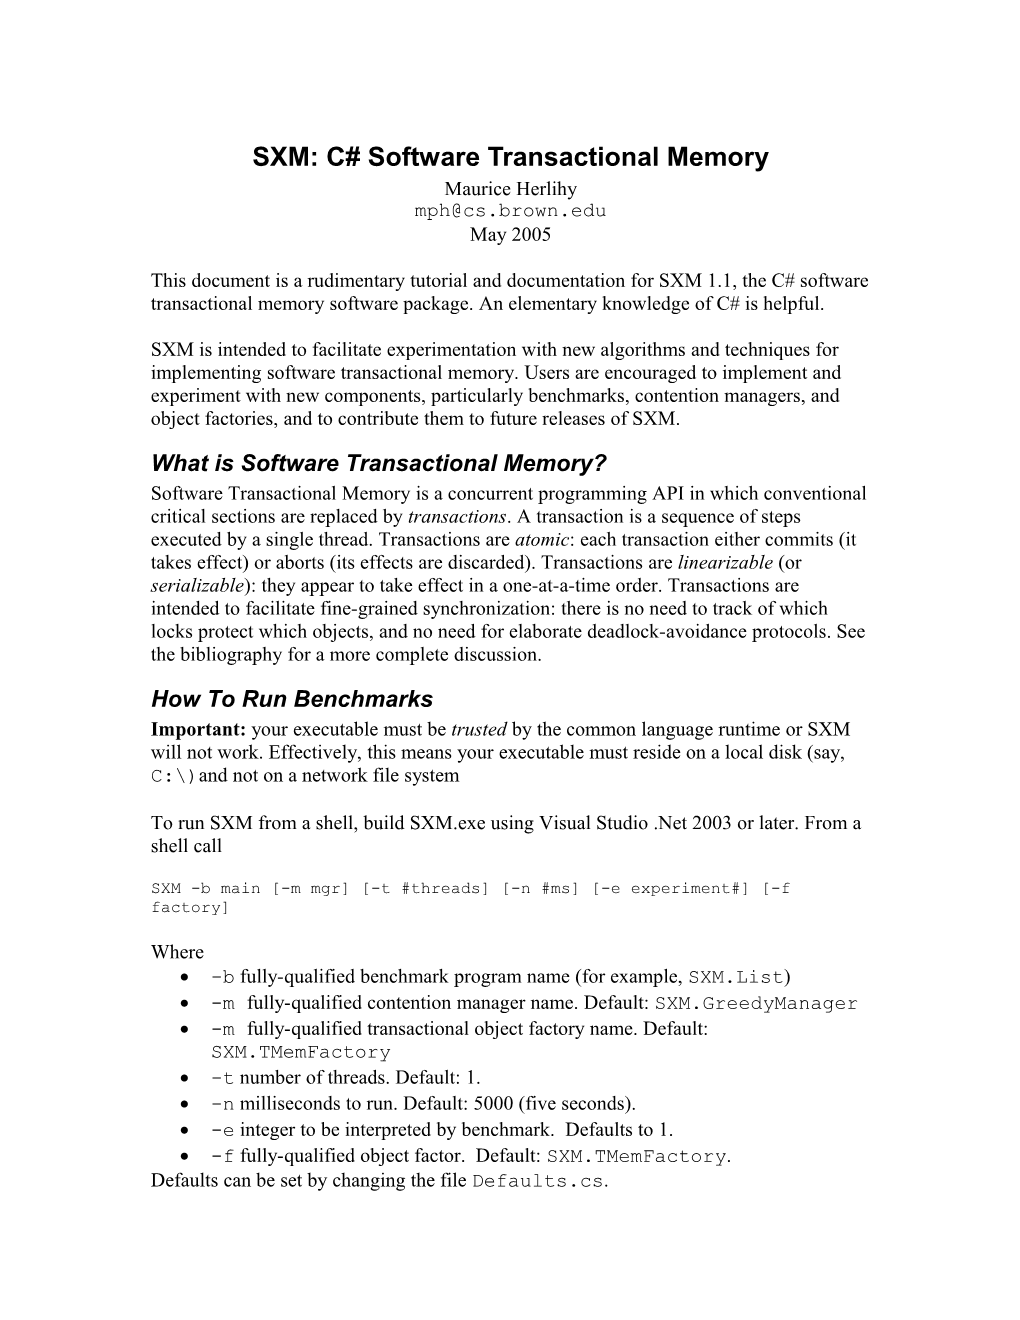 SXM Software Transactional Memory